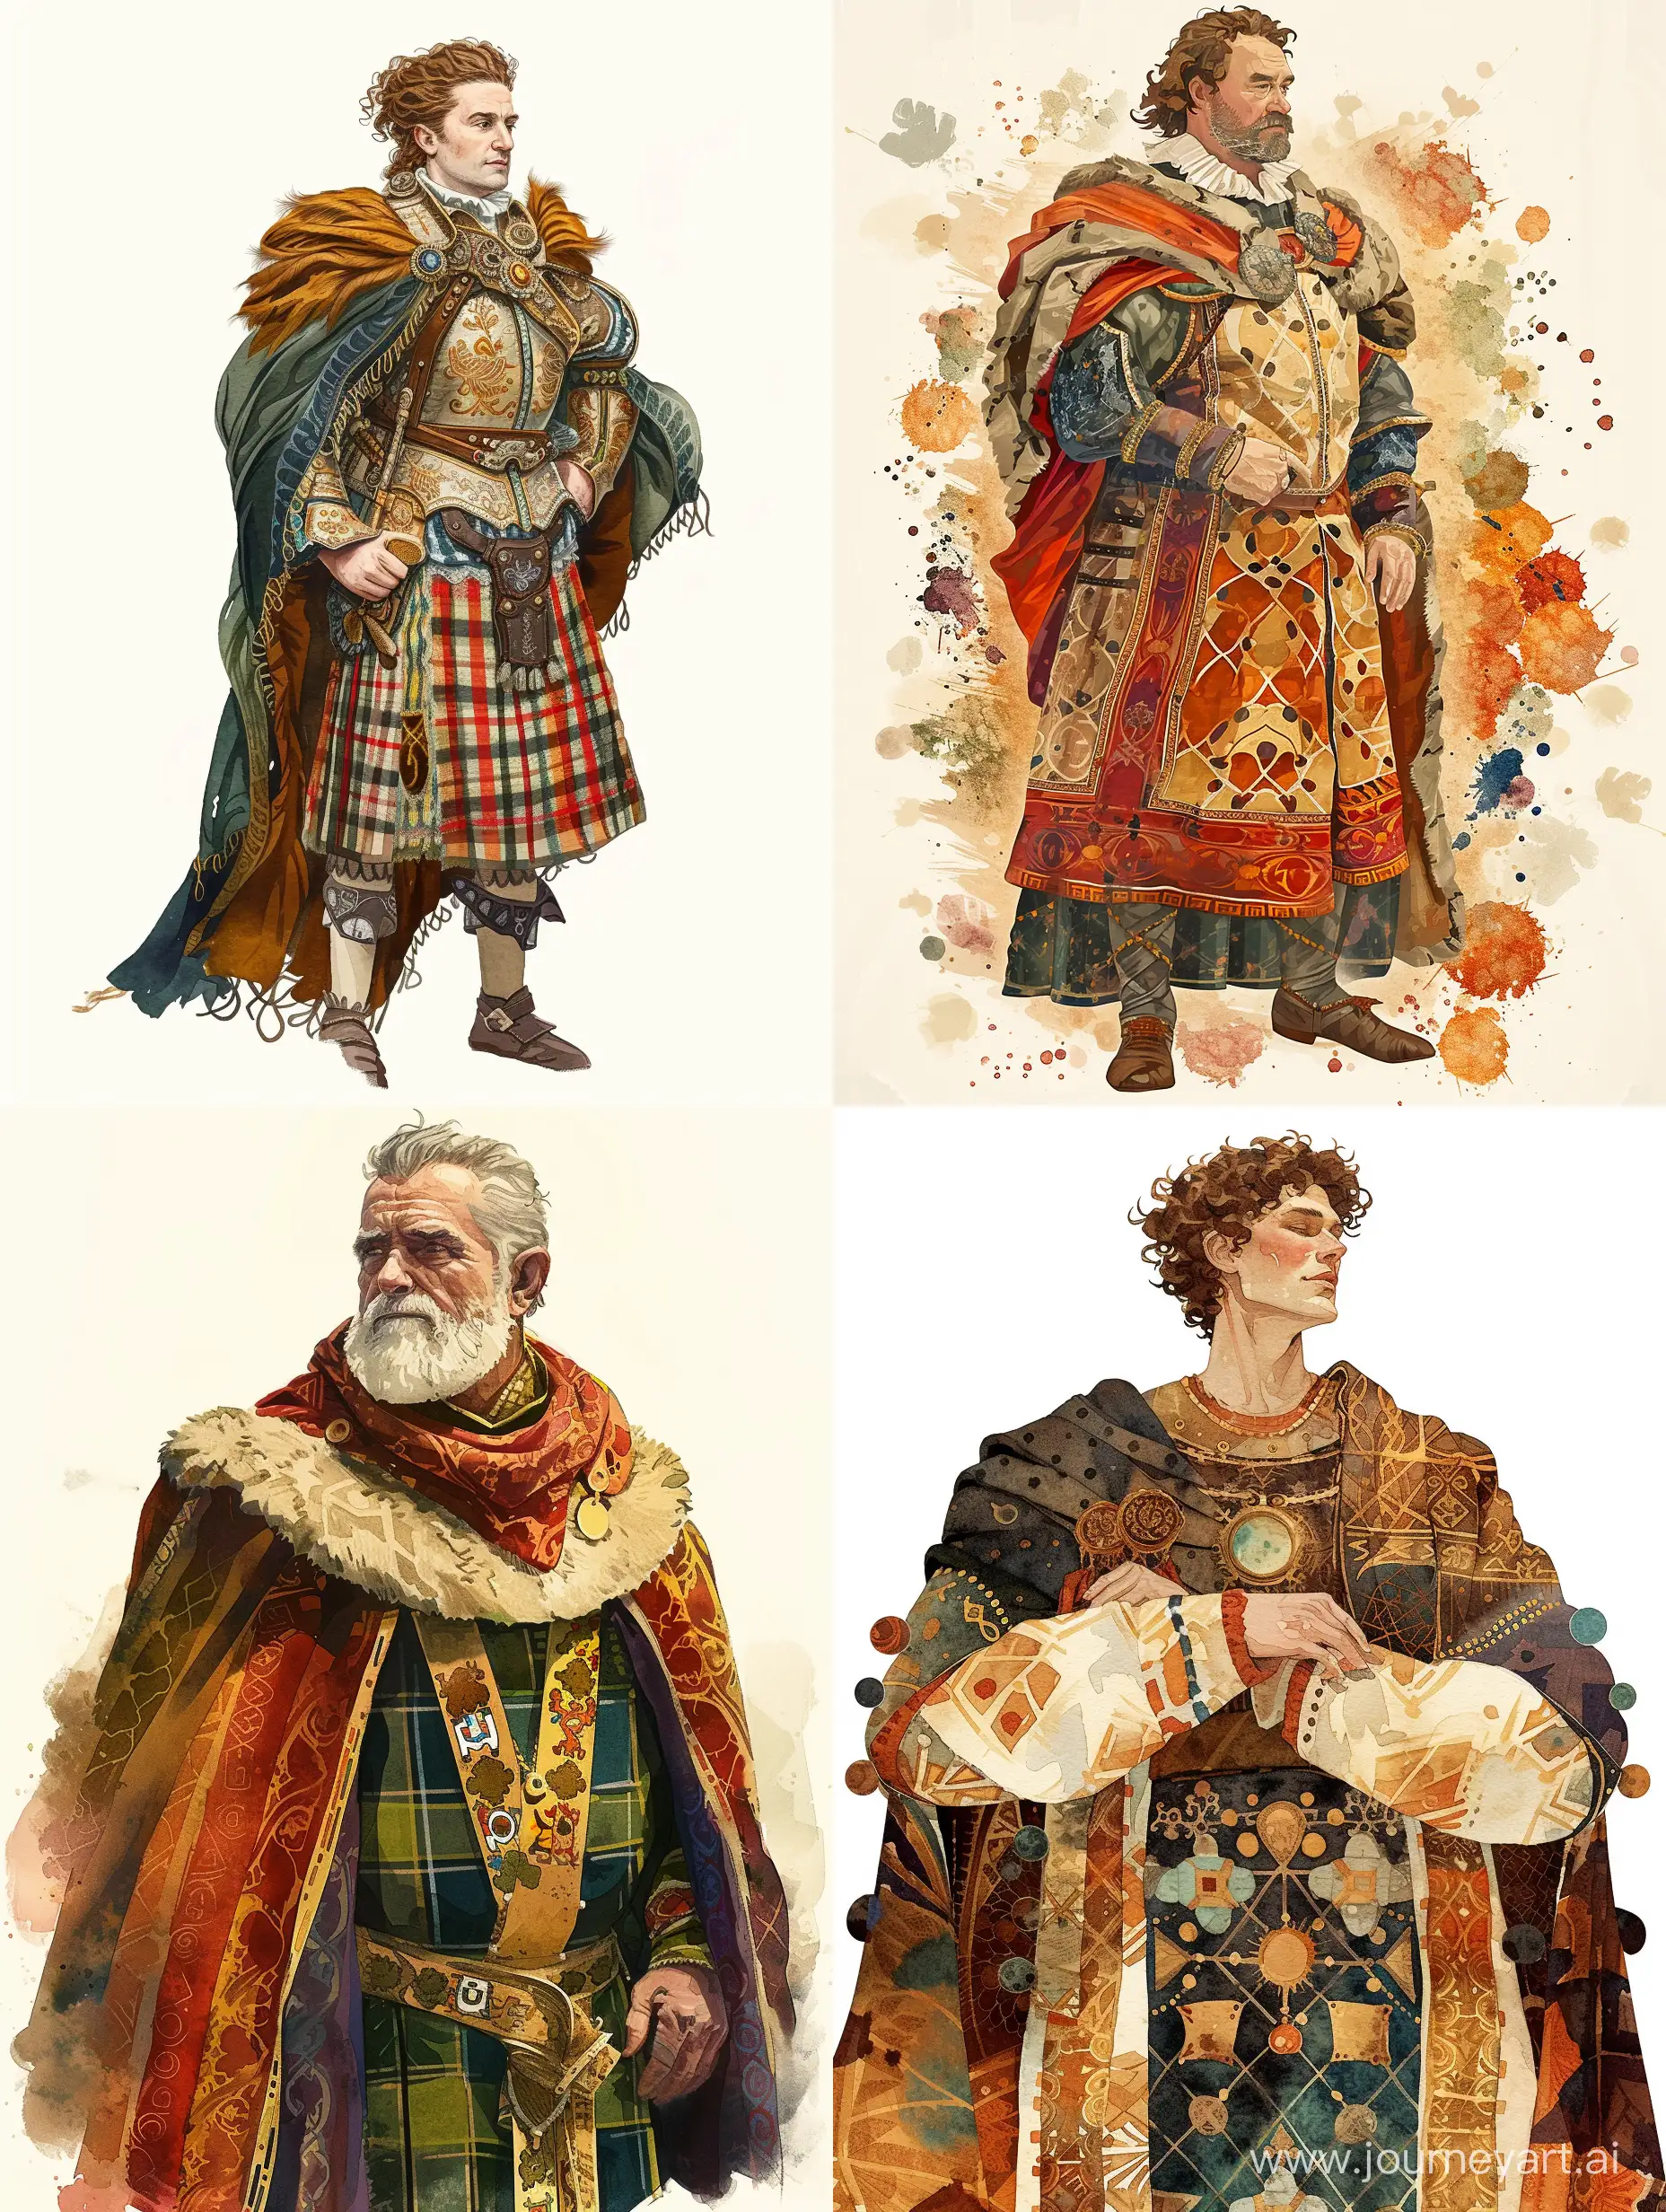 Elegant-Watercolor-Portrait-of-Ancient-Scottish-King-in-Rich-Attire